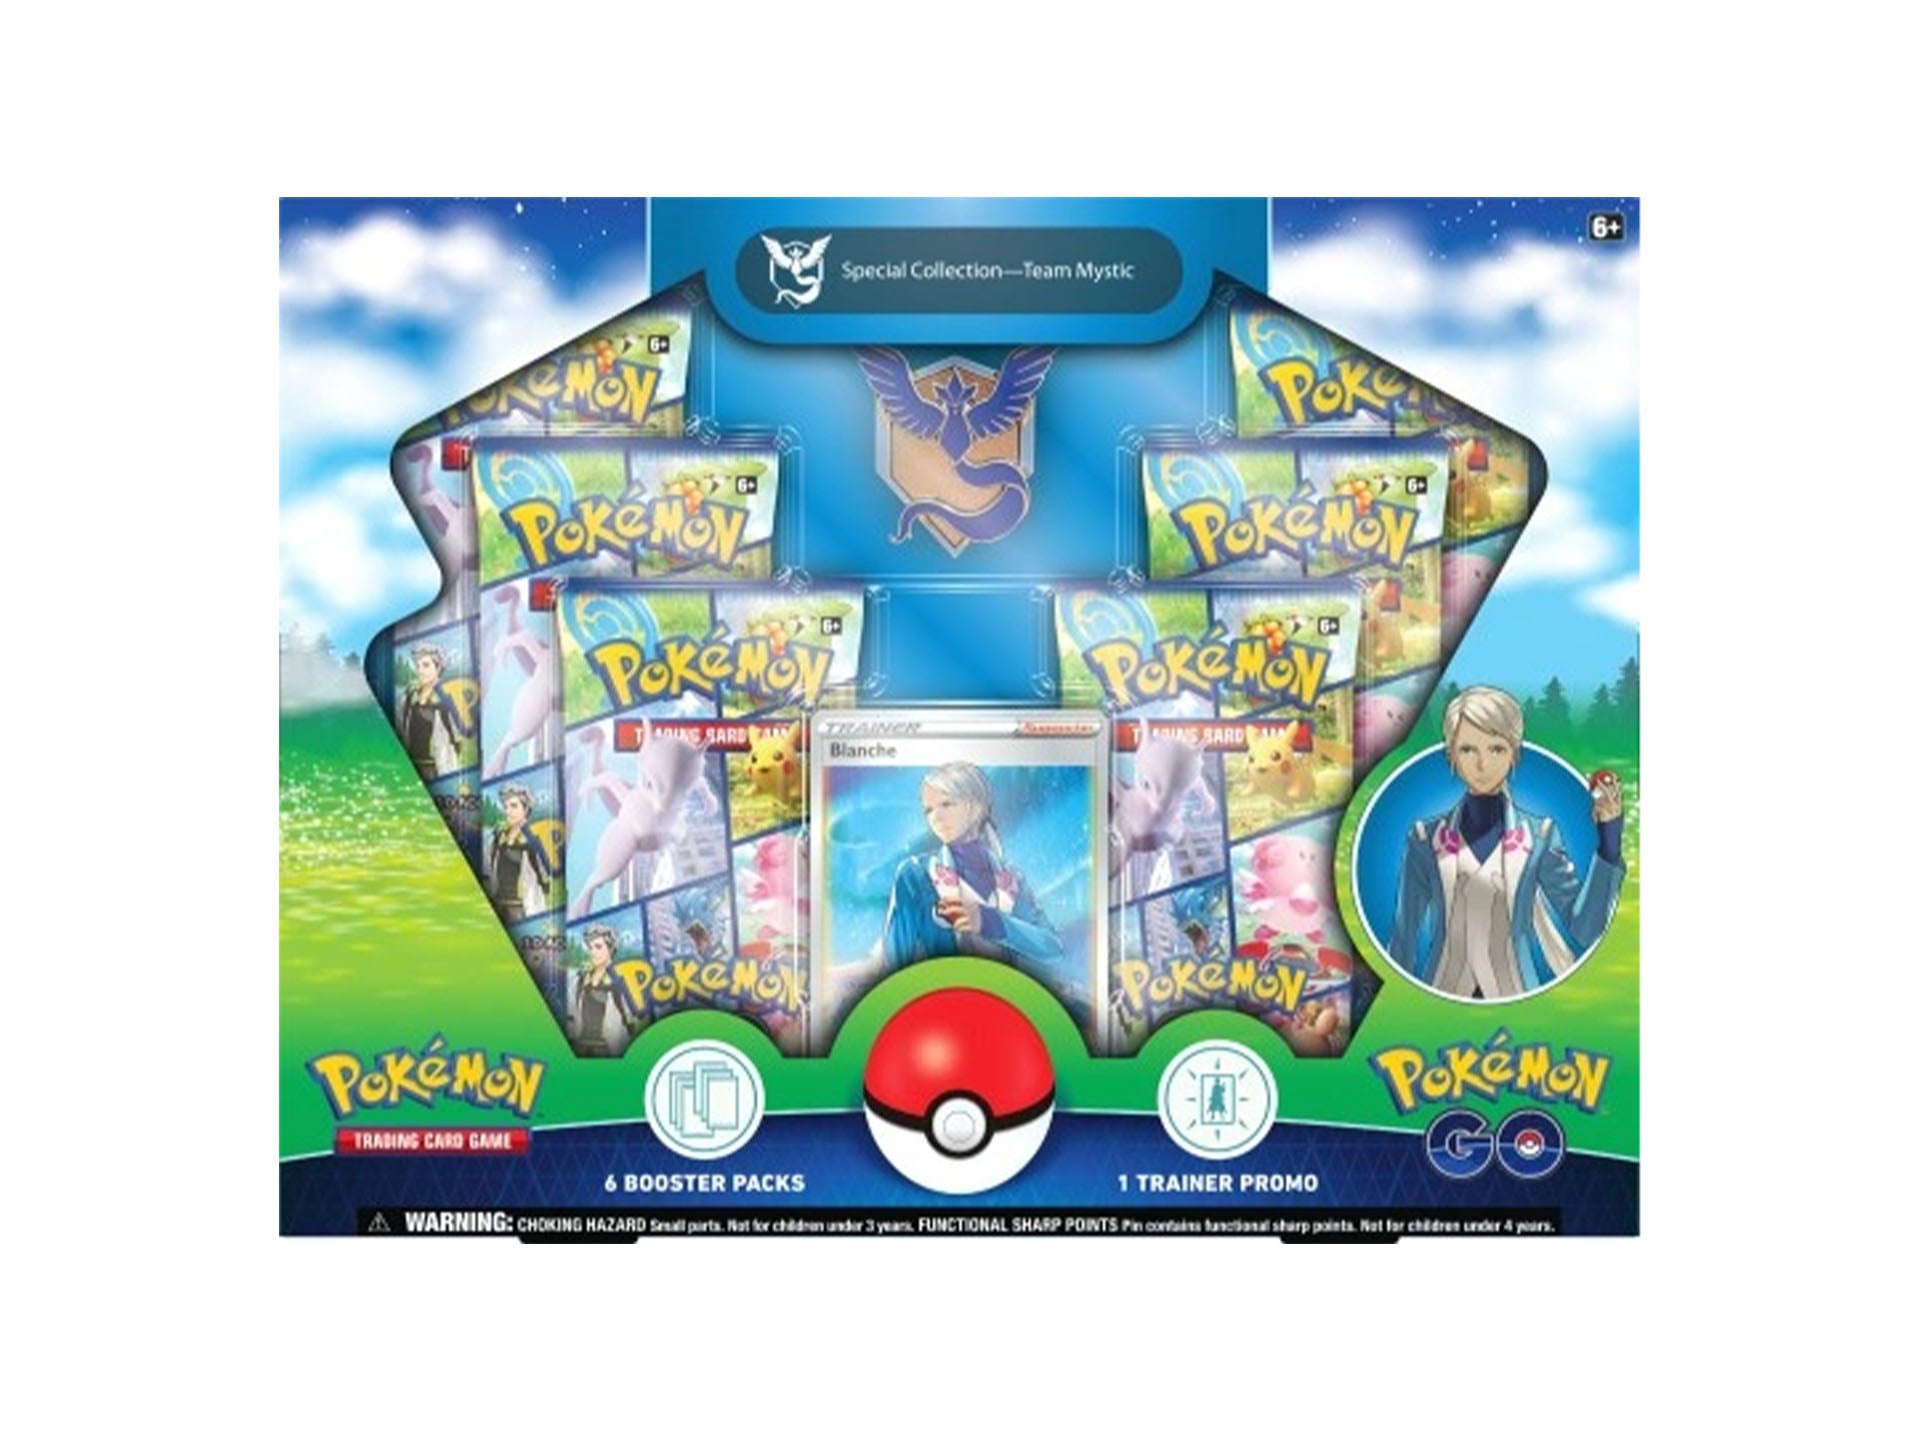 Pokémon Go Special Collection Box- Team Mystic